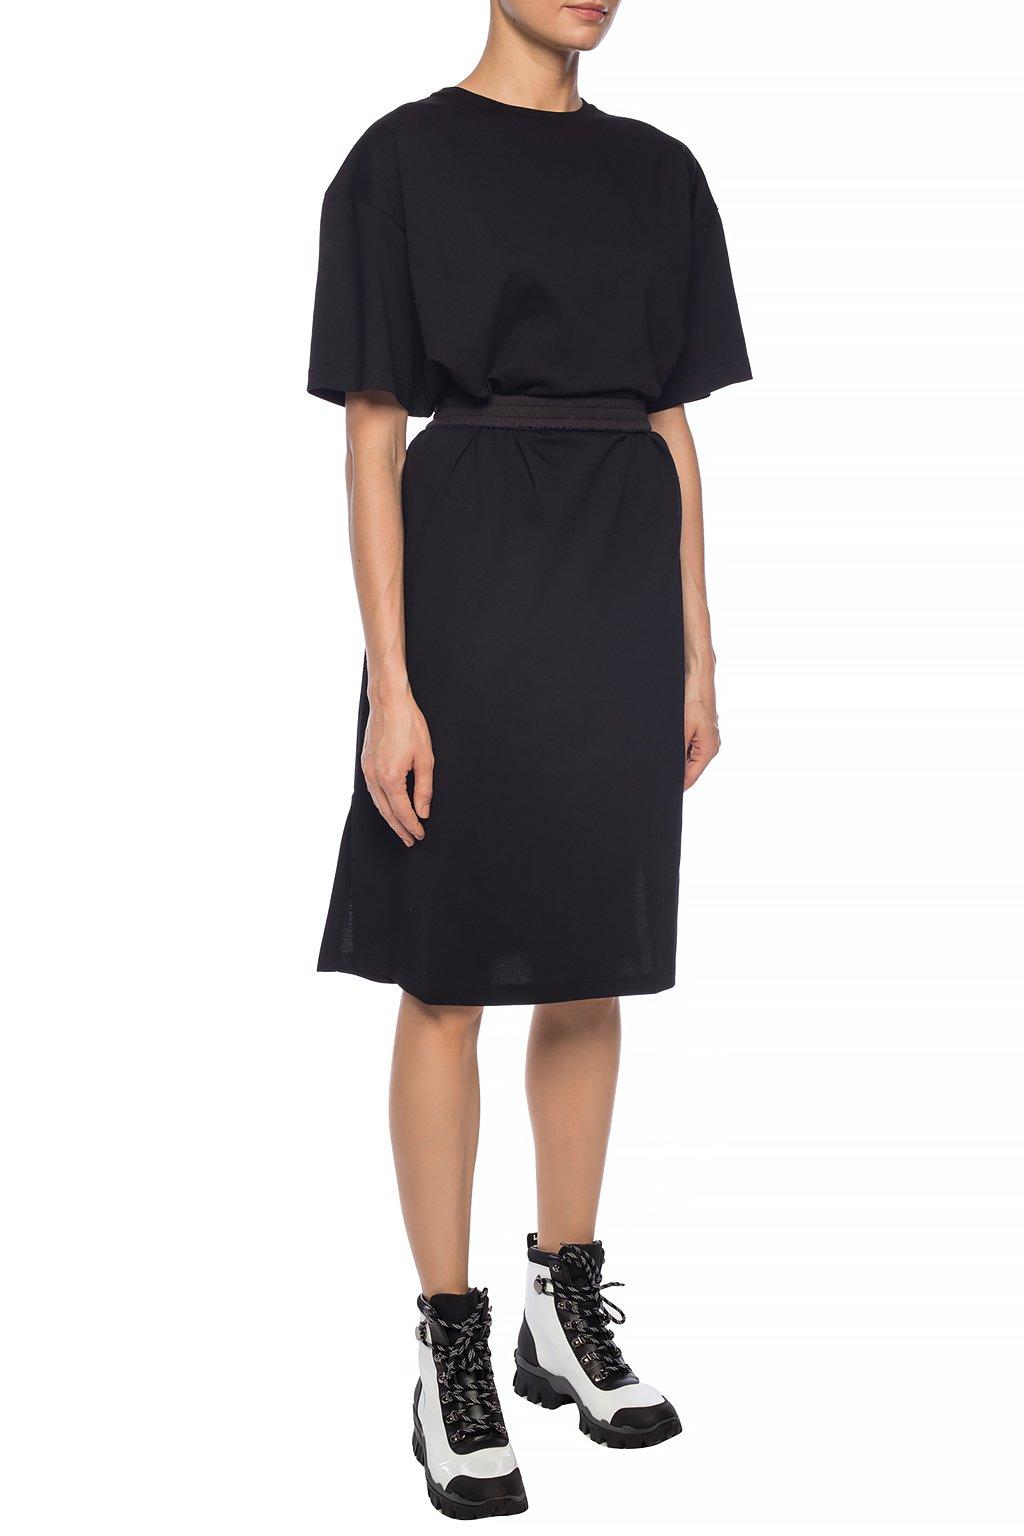 Moncler Cotton Branded Dress in Black - Lyst